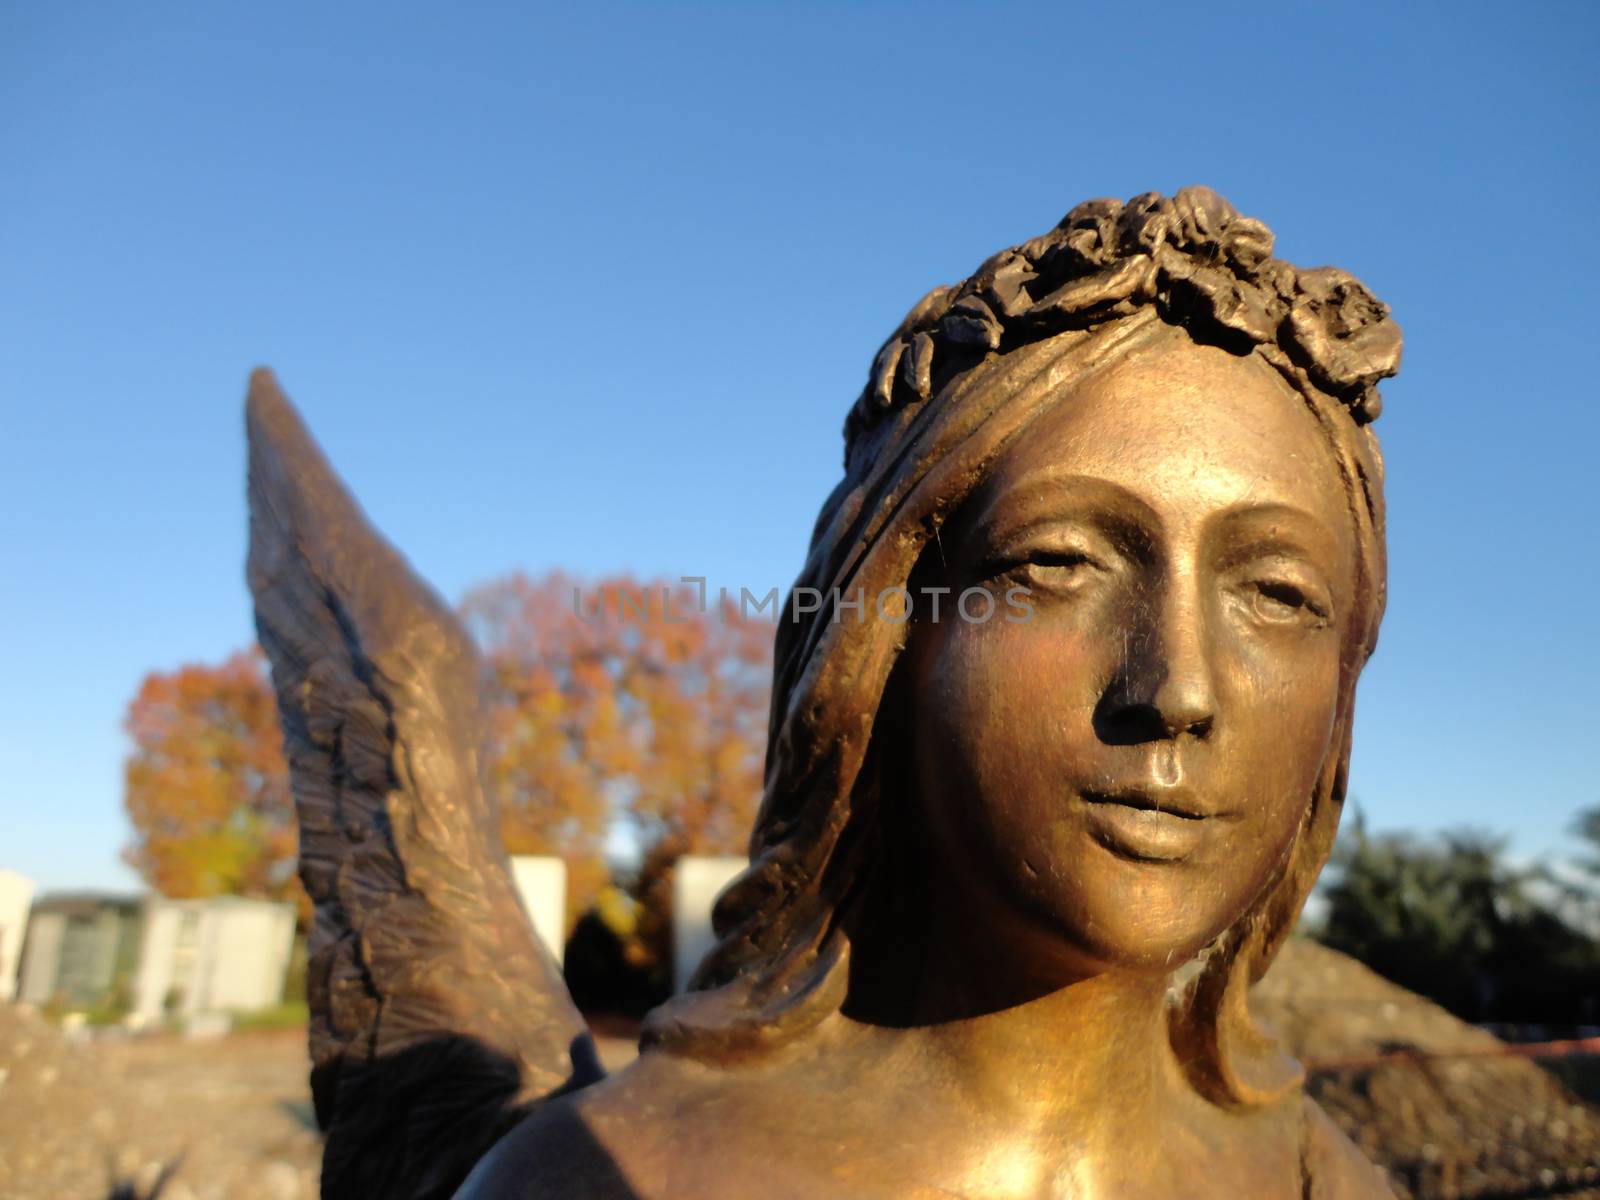 Detail of a golden sculpture of an angel: face foreground